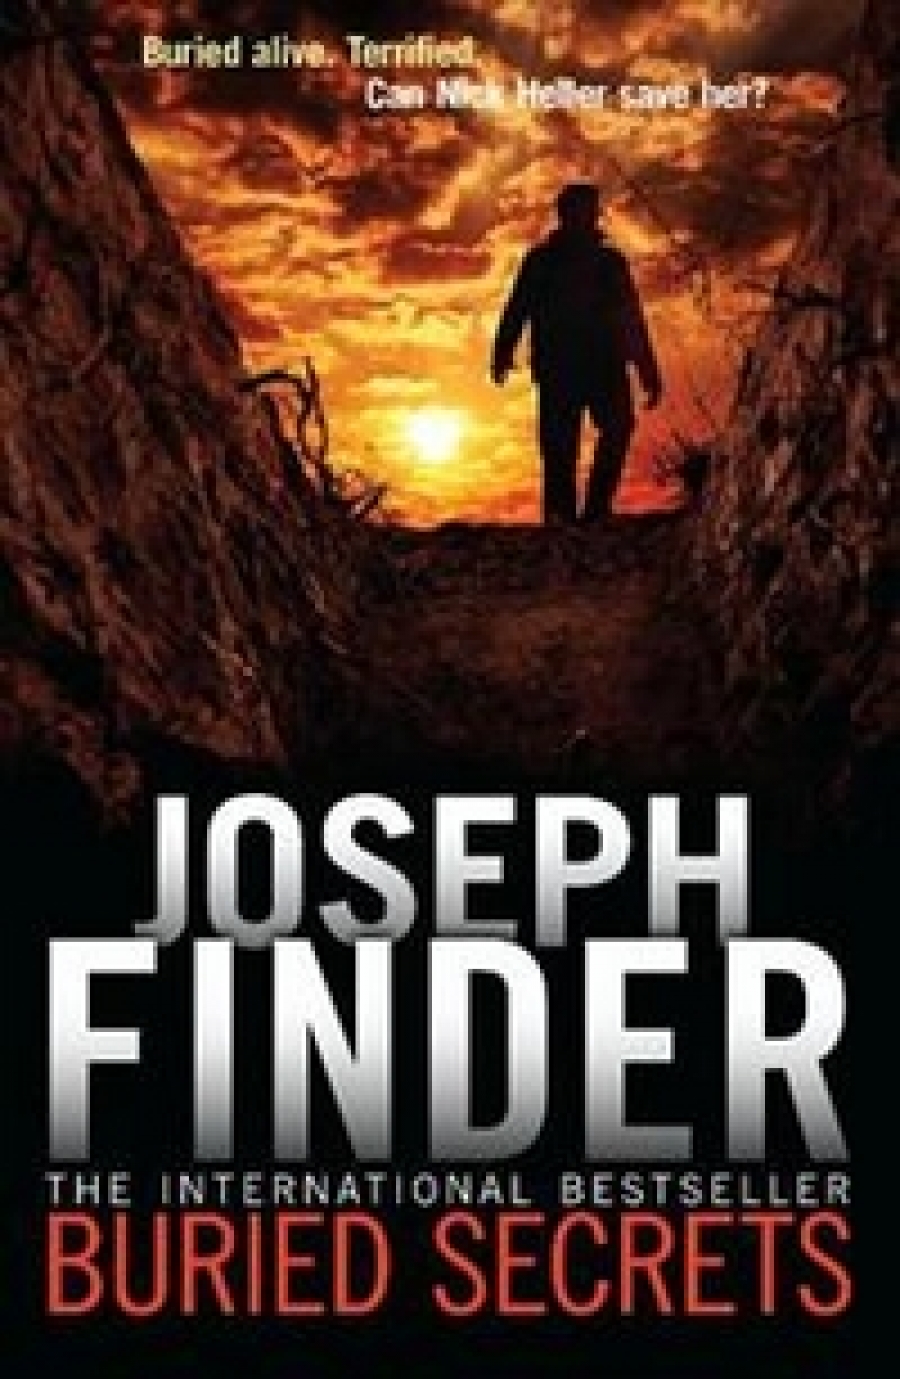 Joseph, Finder Buried Secrets  (Intern. bestseller) 